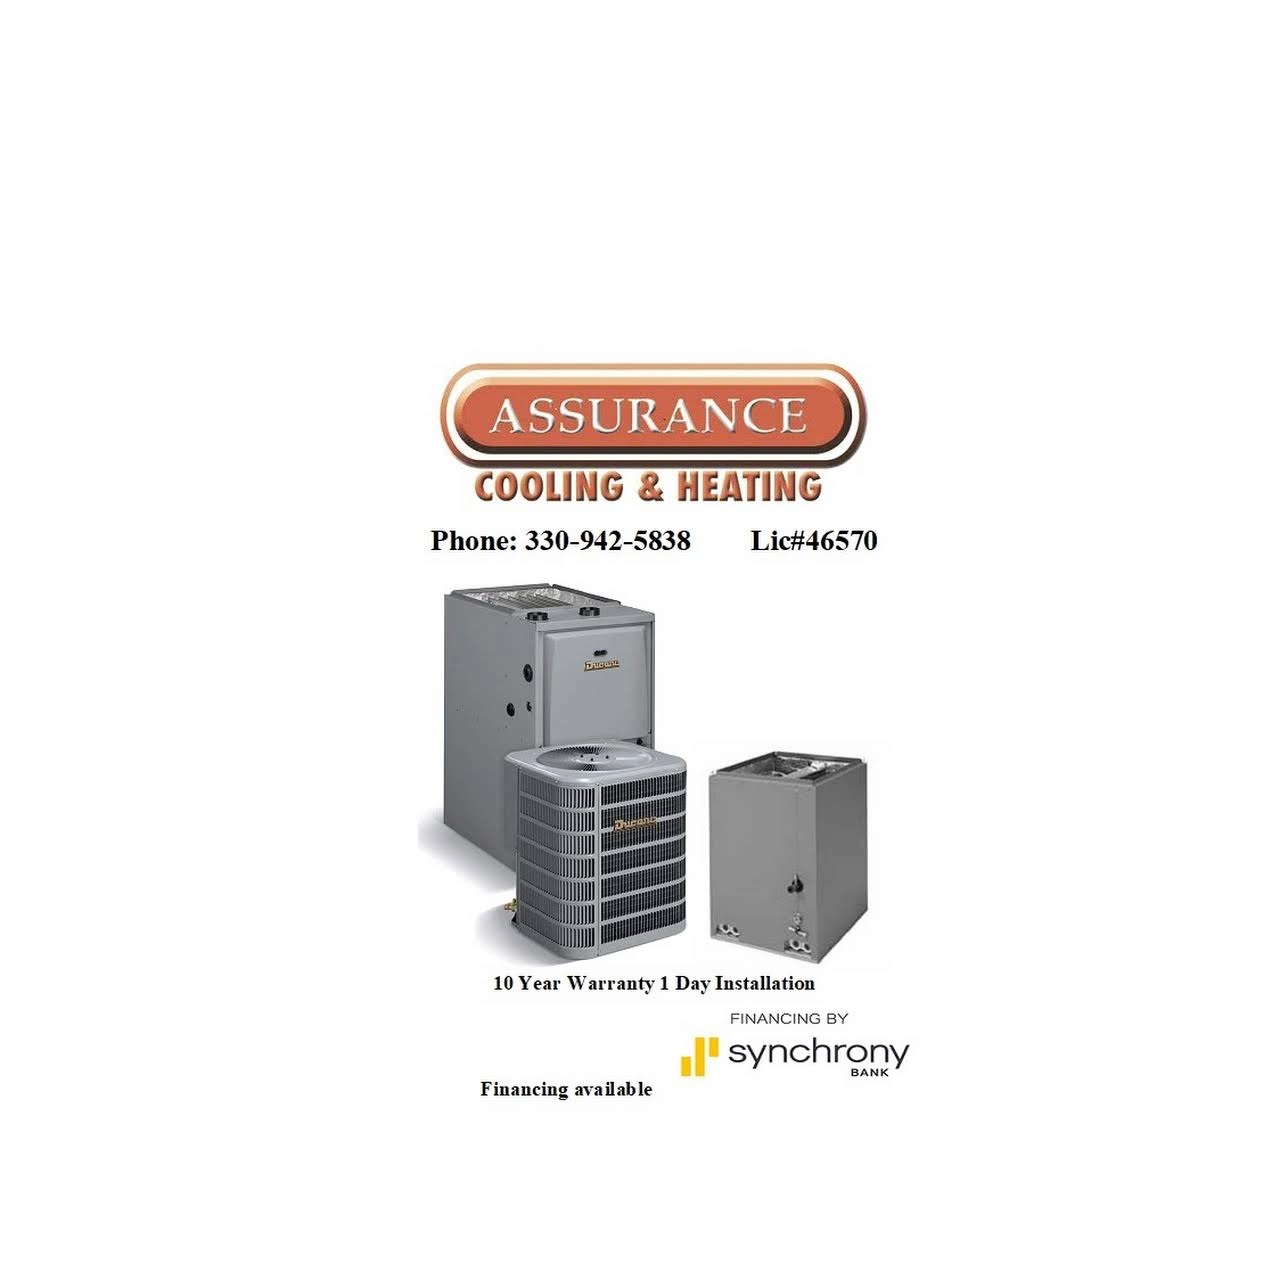 Assurance Cooling & Heating Logo